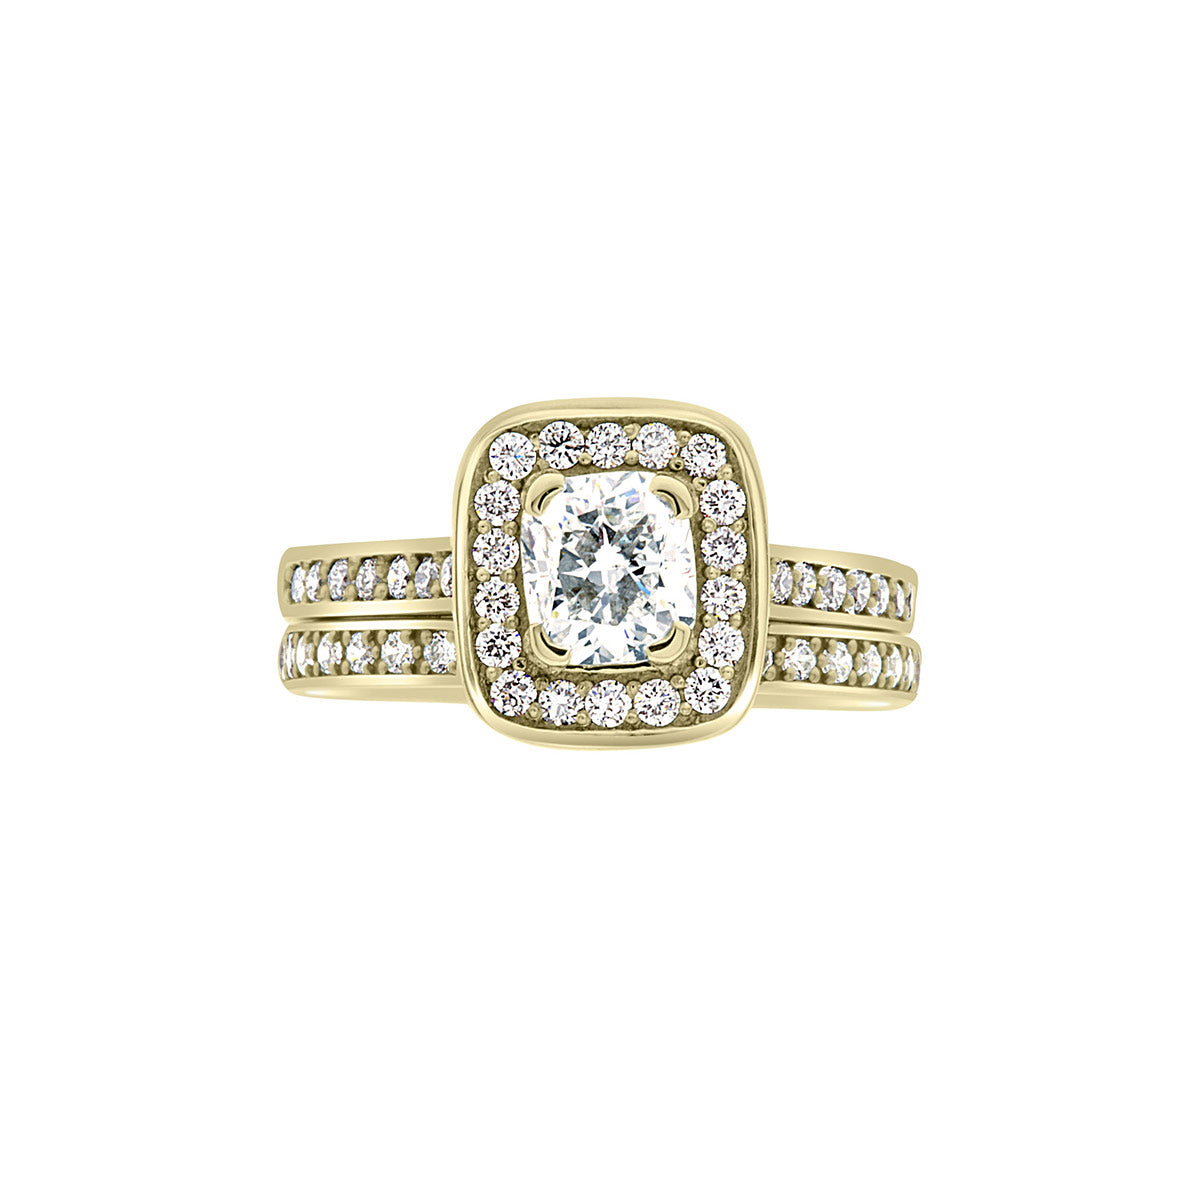 Cushion Cut Diamond Ring in yellow gold with a matching diamond set wedding ring